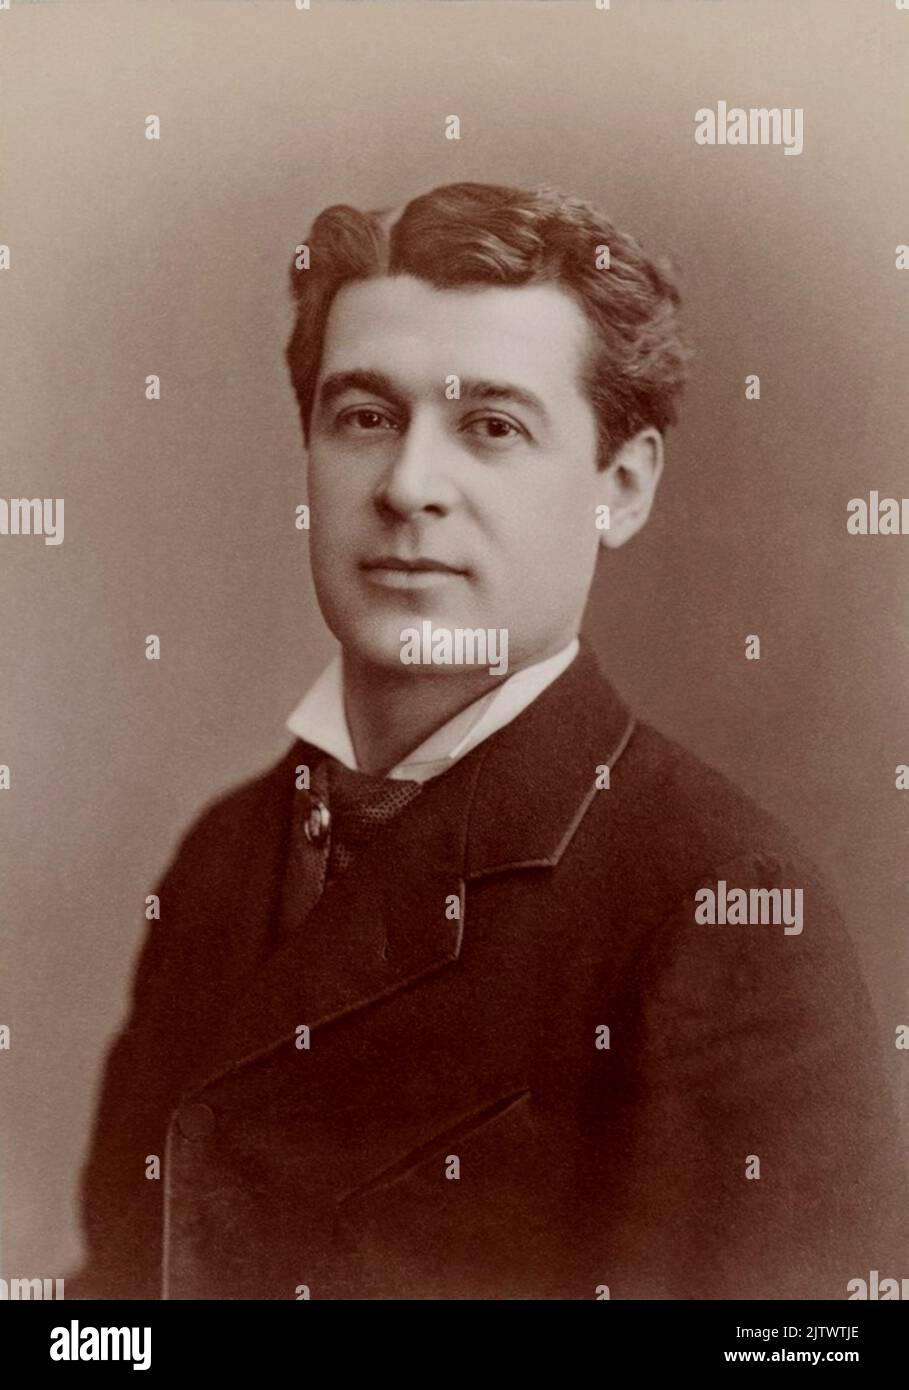 1879 c., Paris , FRANCE : The french actor and dramatist GEORGES BAILLET ( 1848 - 1935 ) of Comédie Française  . Photo by Paul Nadar , Paris . - BELLE EPOQUE - ATTORE TEATRALE - TEATRO - THEATRE - PORTRAIT - RITRATTO - HISTORY - FOTO STORICHE  - collar - colletto - tie - cravatta - MODA MASCHILE - FASHION - 800's - '800 - OTTOCENTO --- Archivio GBB Stock Photo